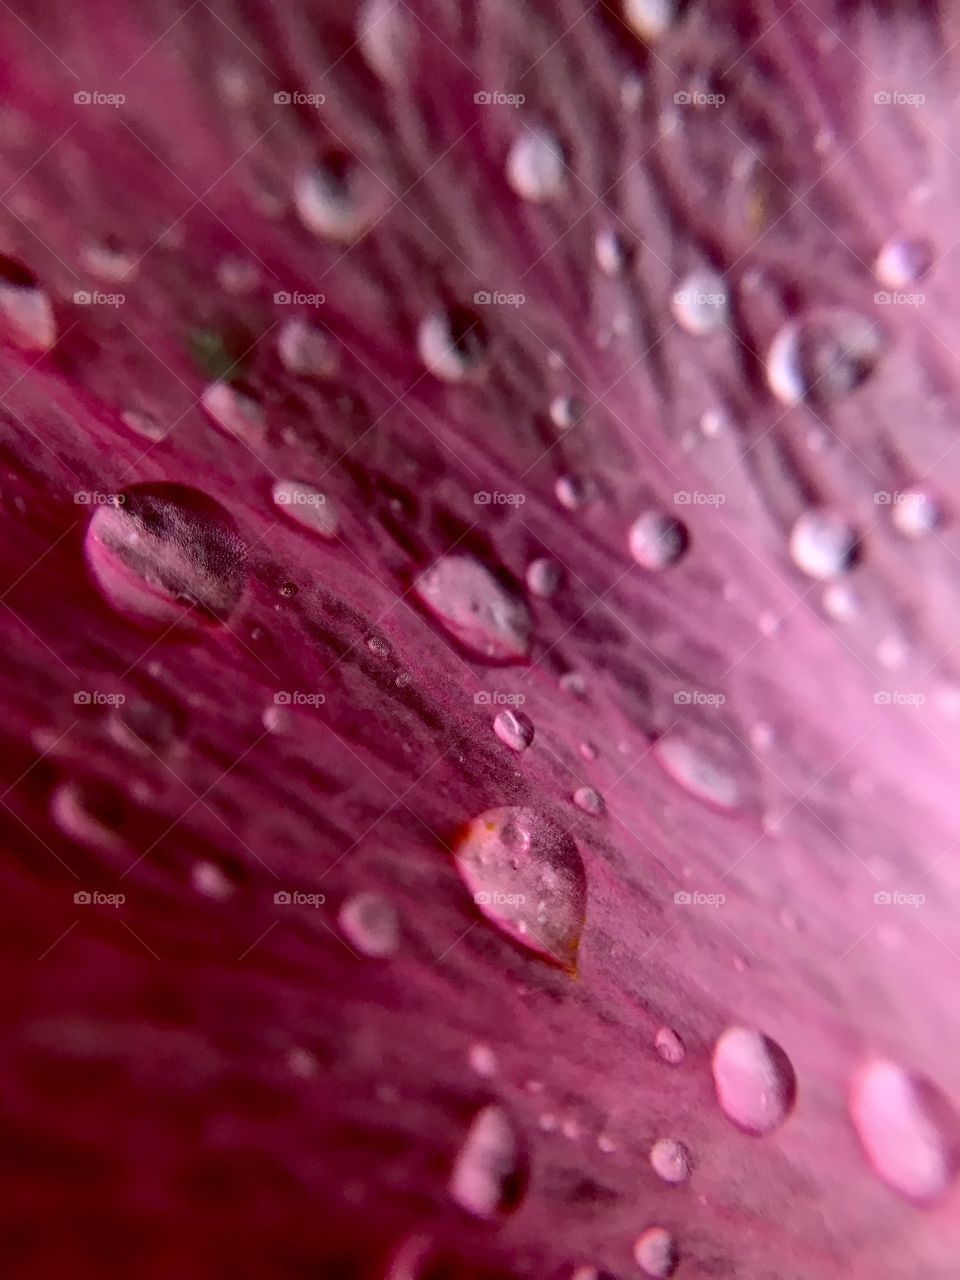 Macro water droplets 